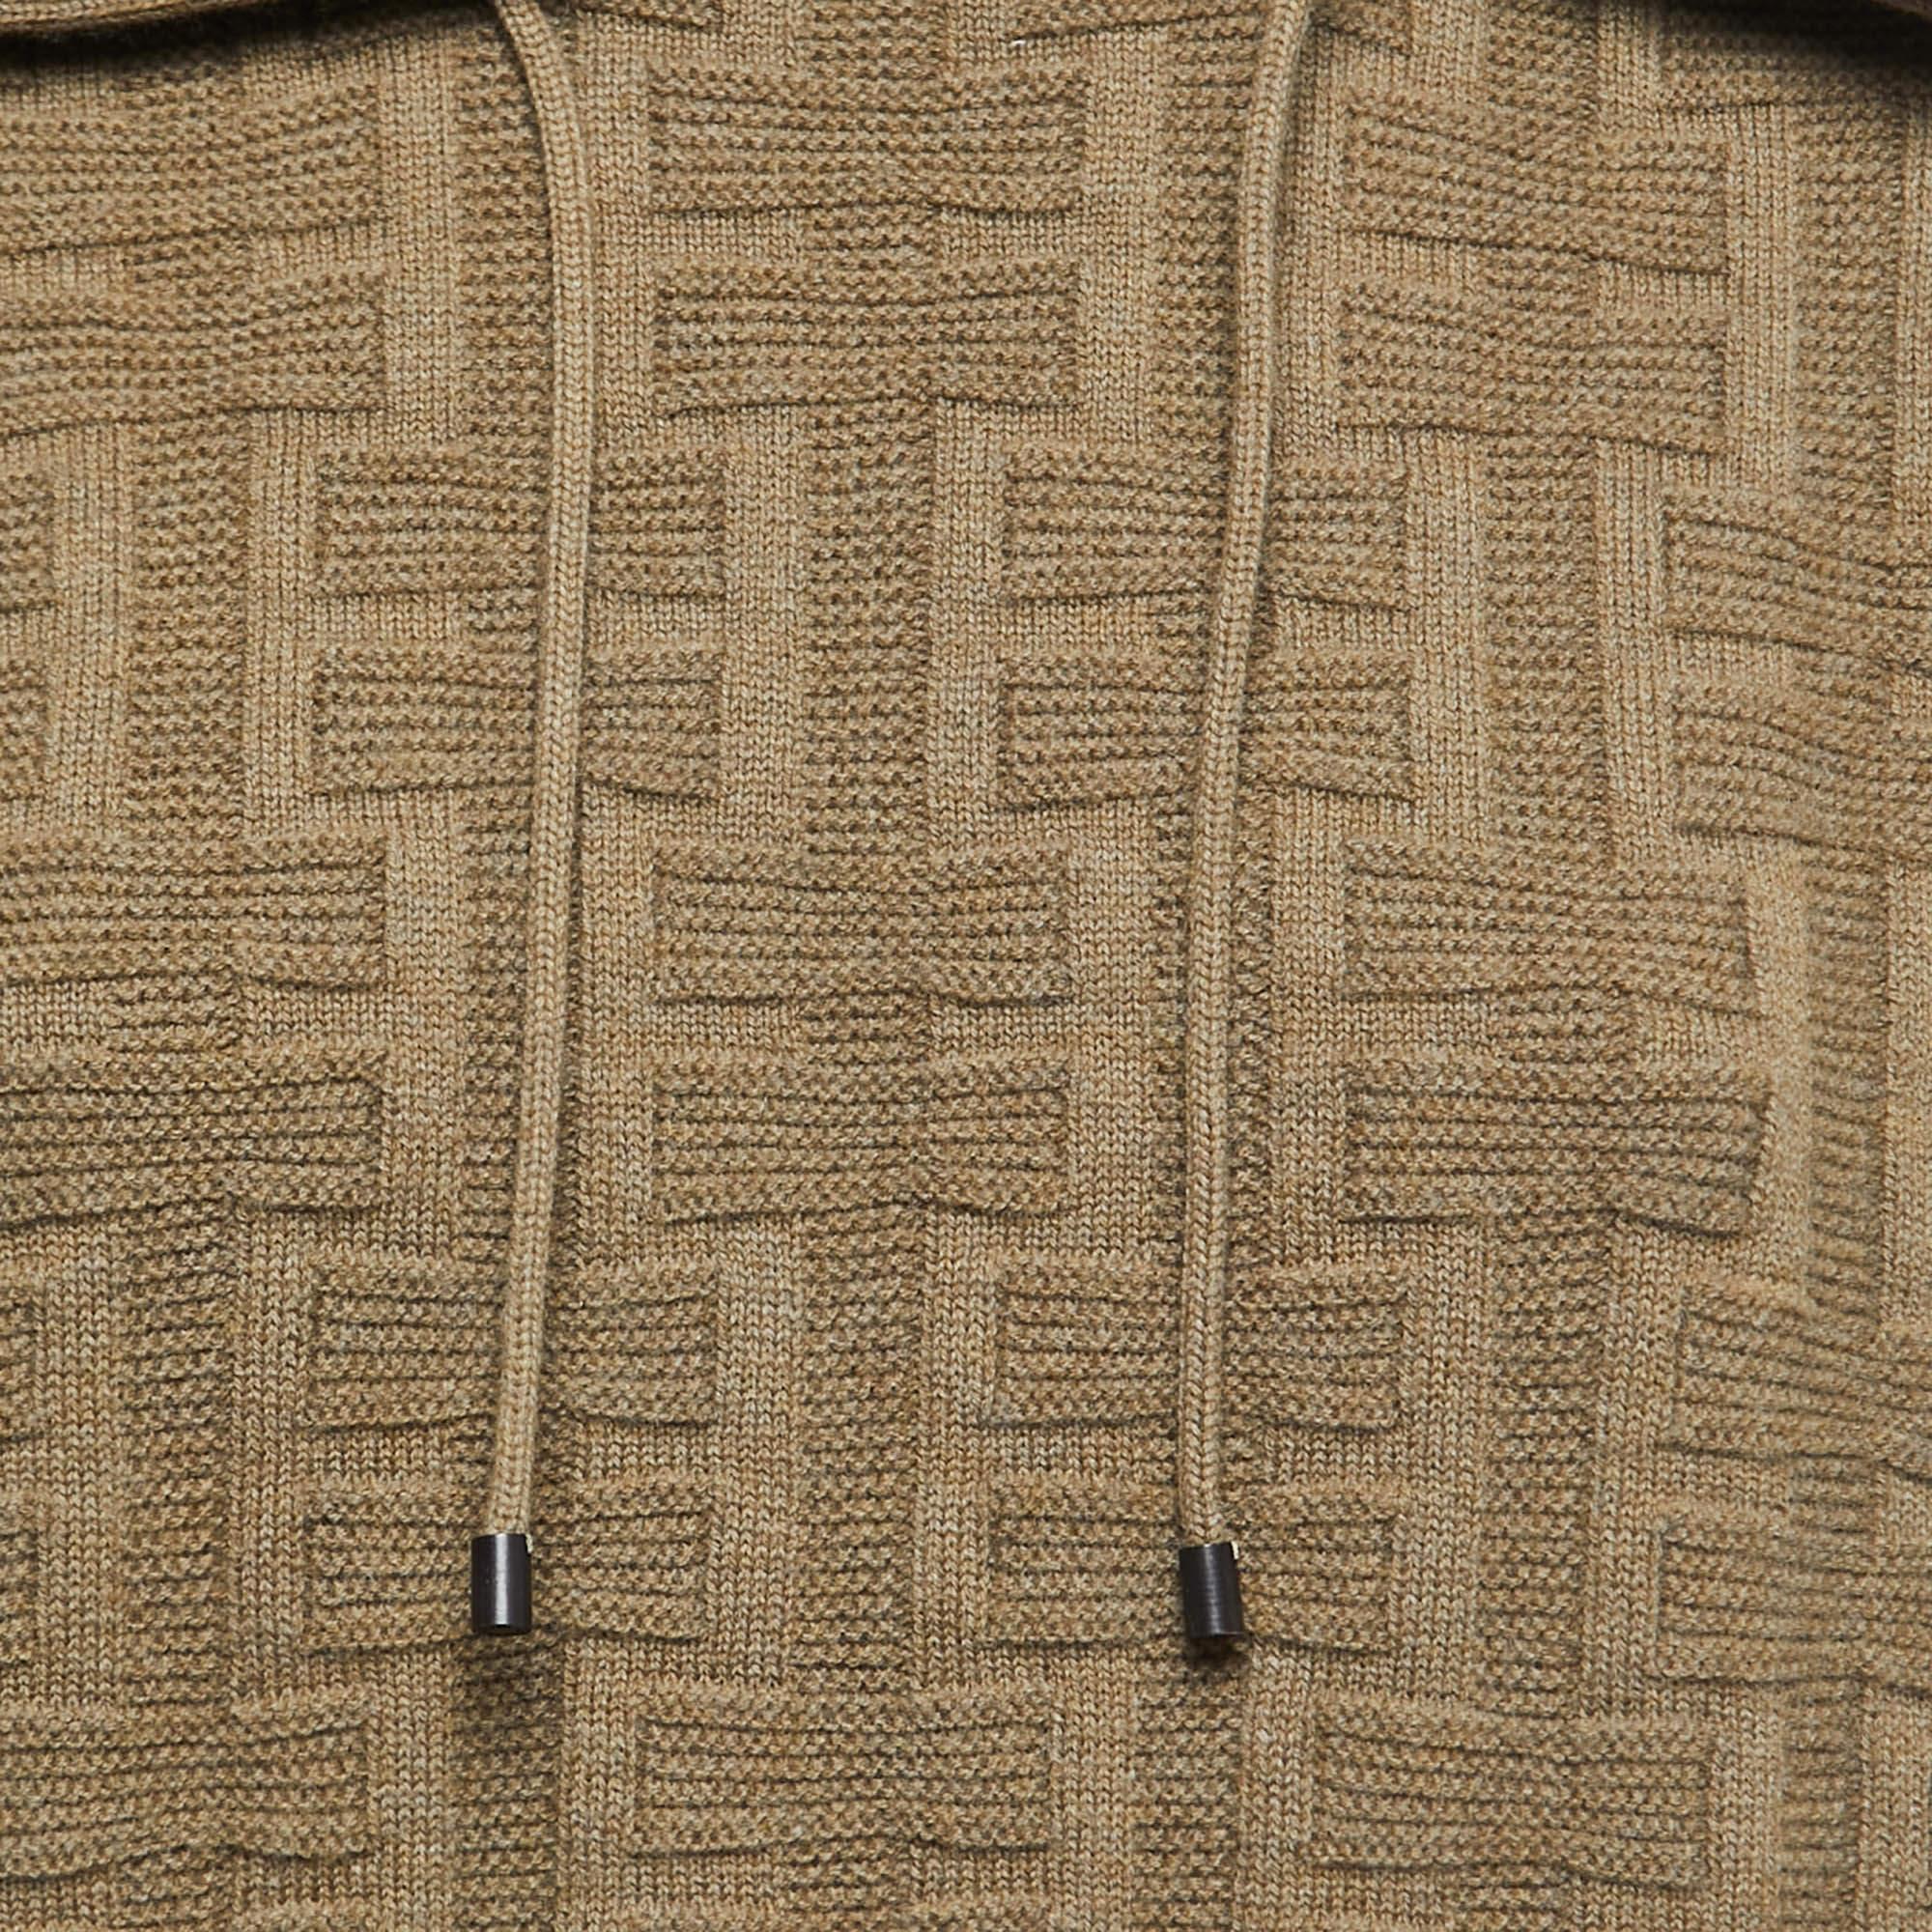 Women's Hermes Brown Textured Wool-Knit Sleeveless Hooded Sweater S